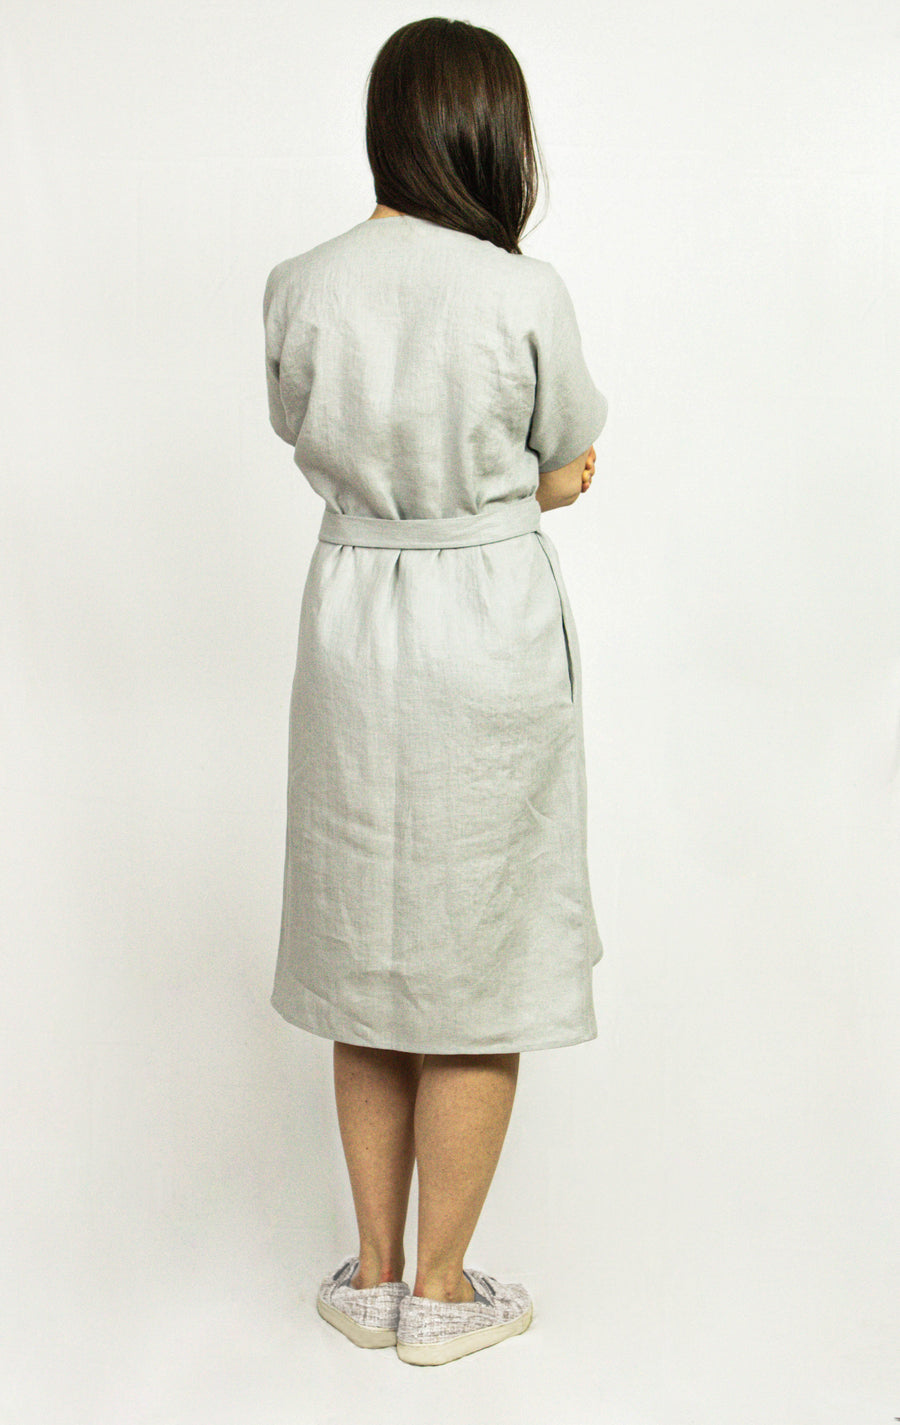 Natural Light Wrap Linen Dress for Summer, Loose Maternity Linen Dress, V-Neck Kimono Dress - Linen Couture Boutique